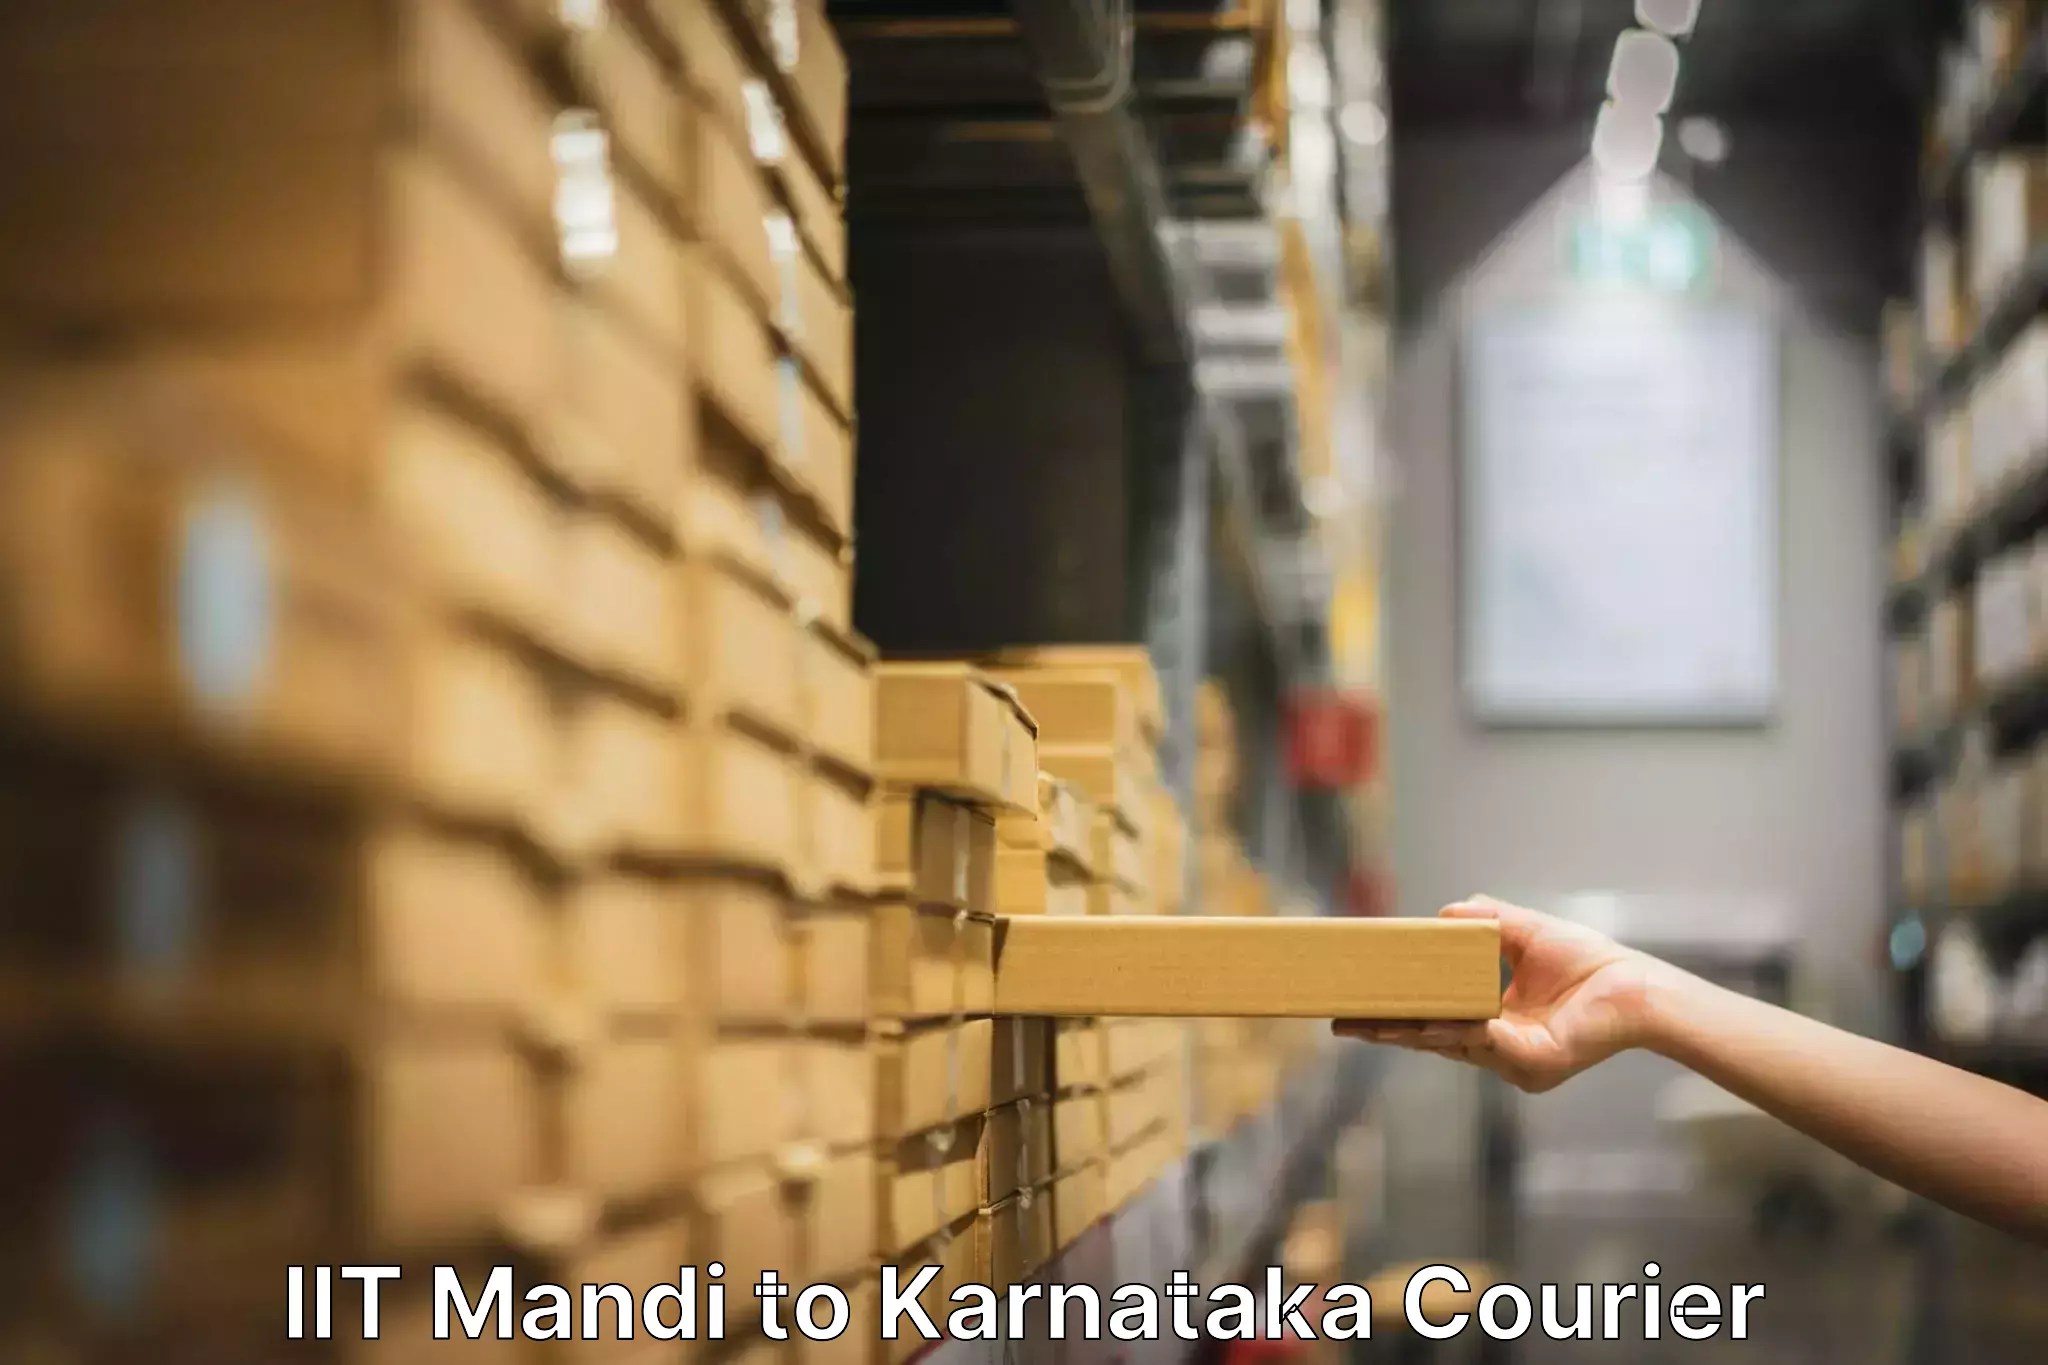 Trusted moving company IIT Mandi to Kanjarakatte